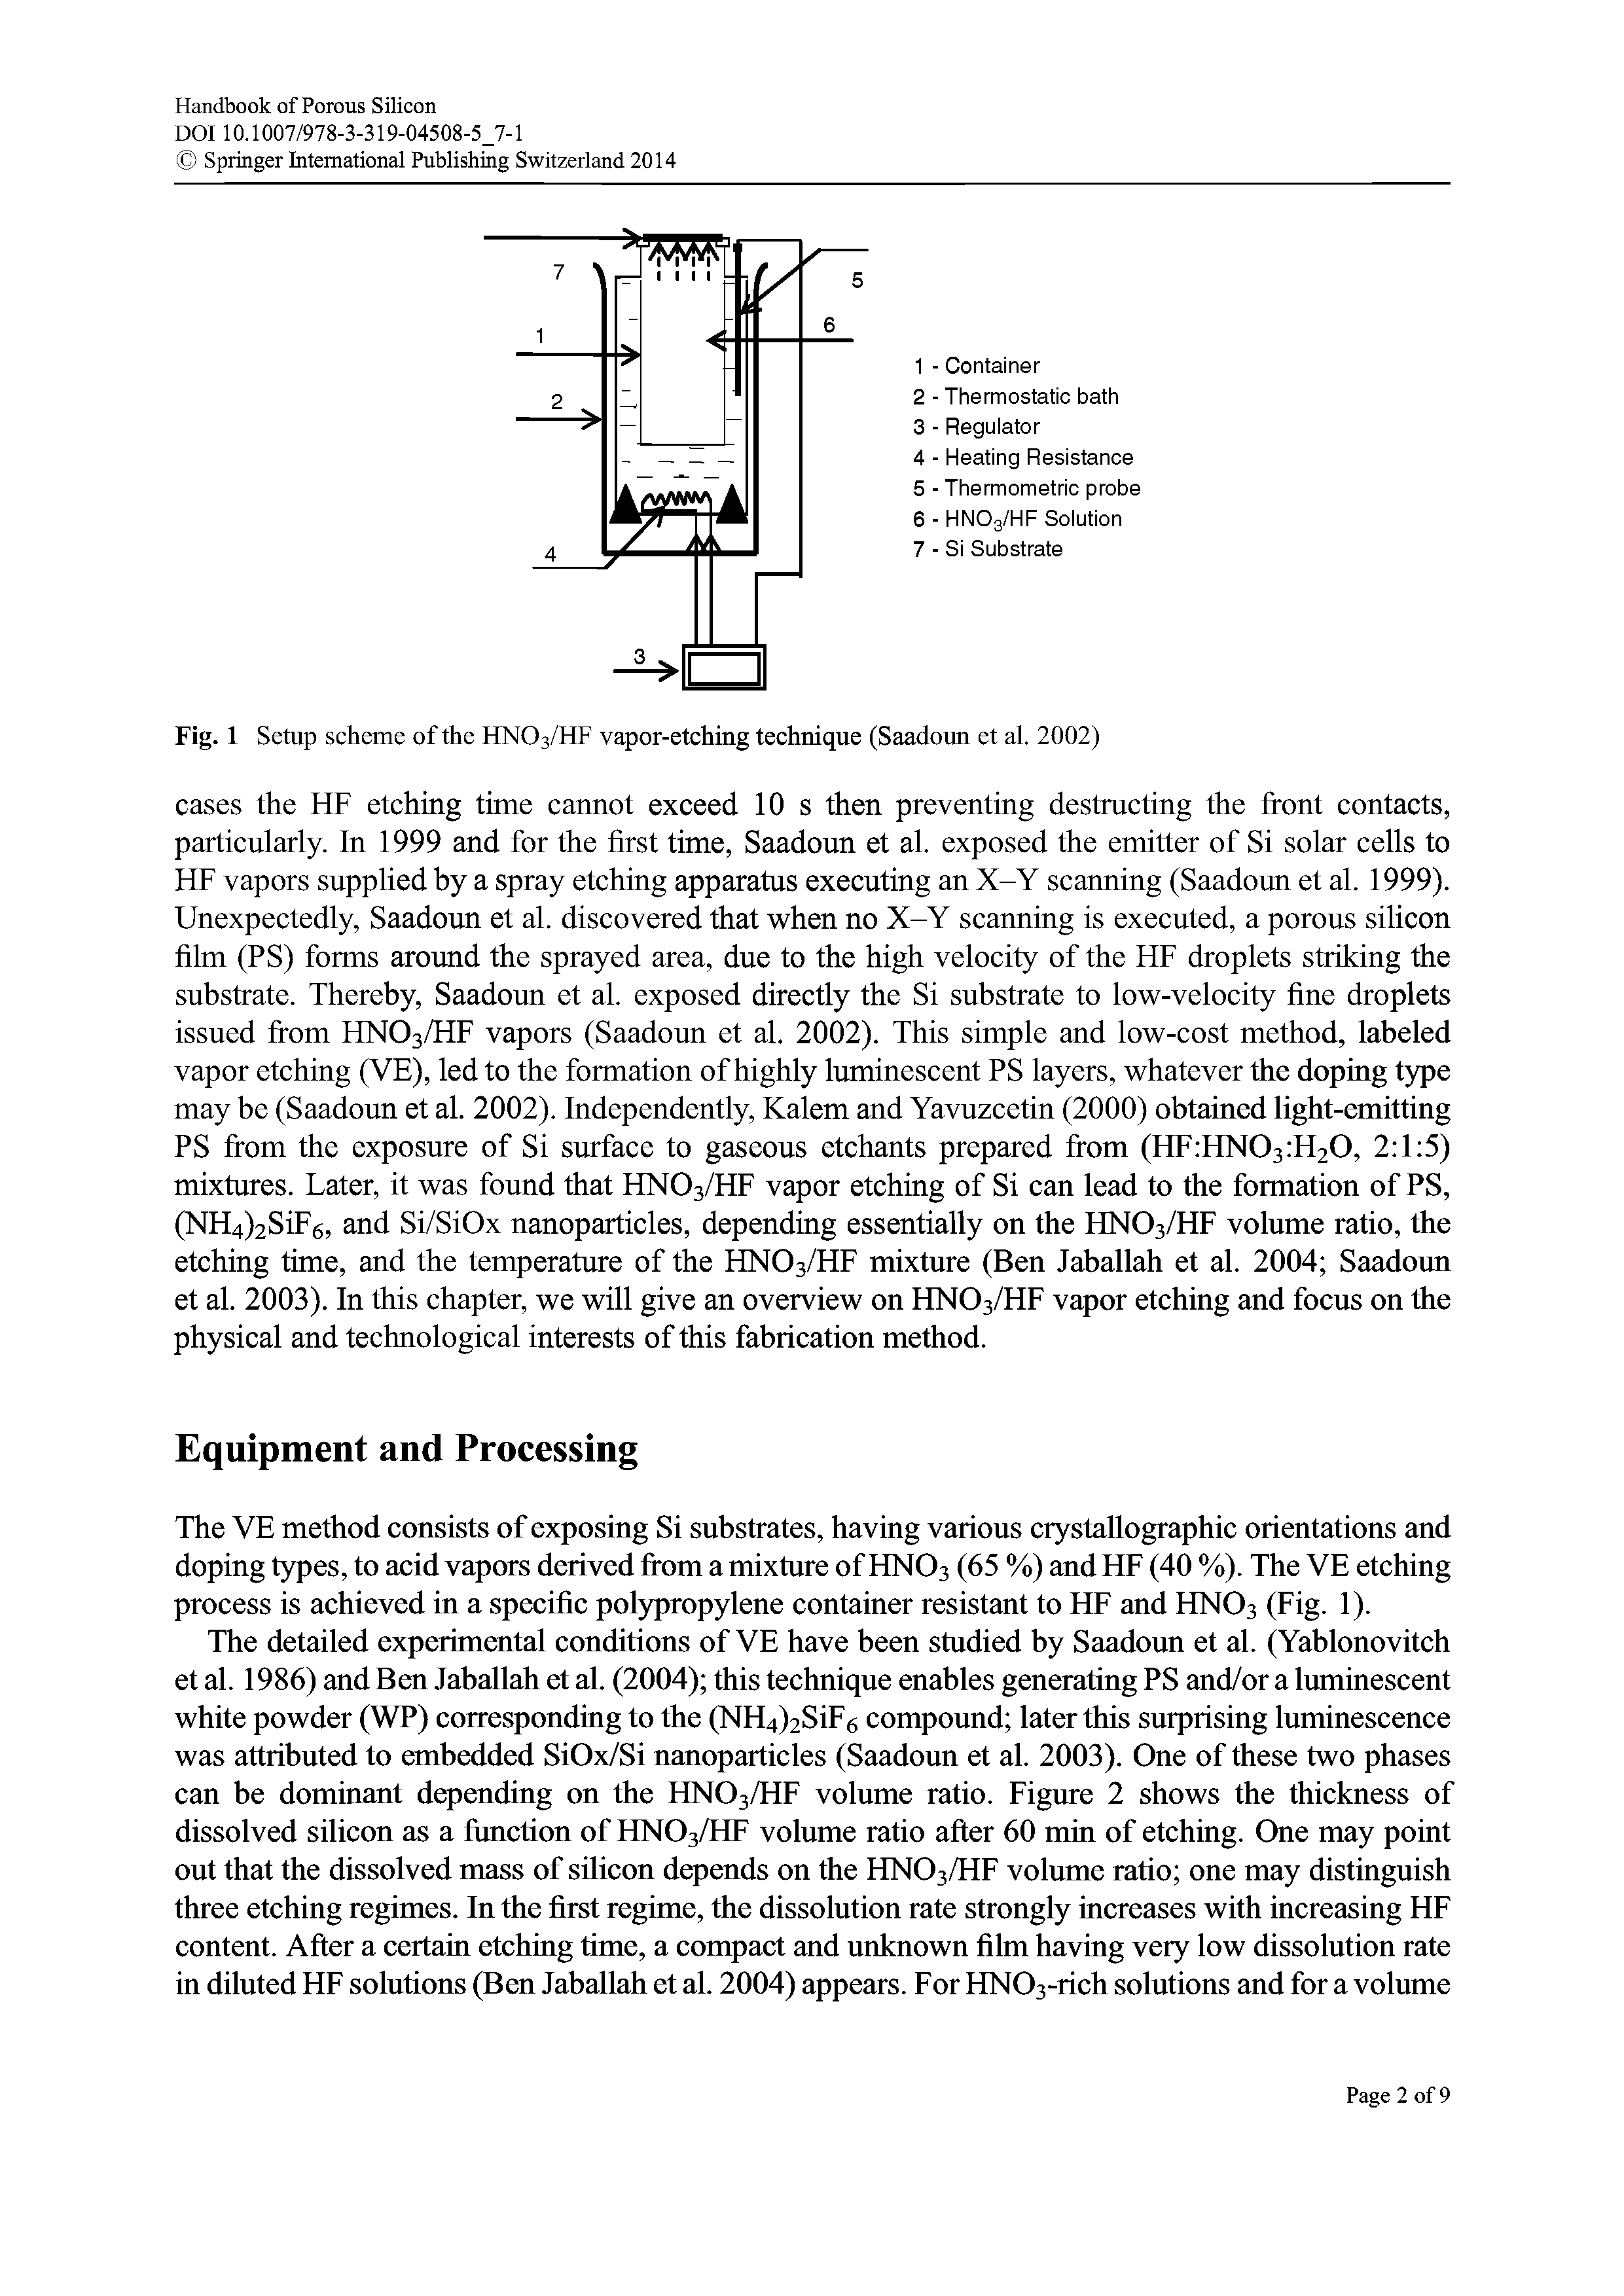 Fig. 1 Setup scheme of the HNO3/HF vapor-etching technique (Saadoun et al. 2002)...